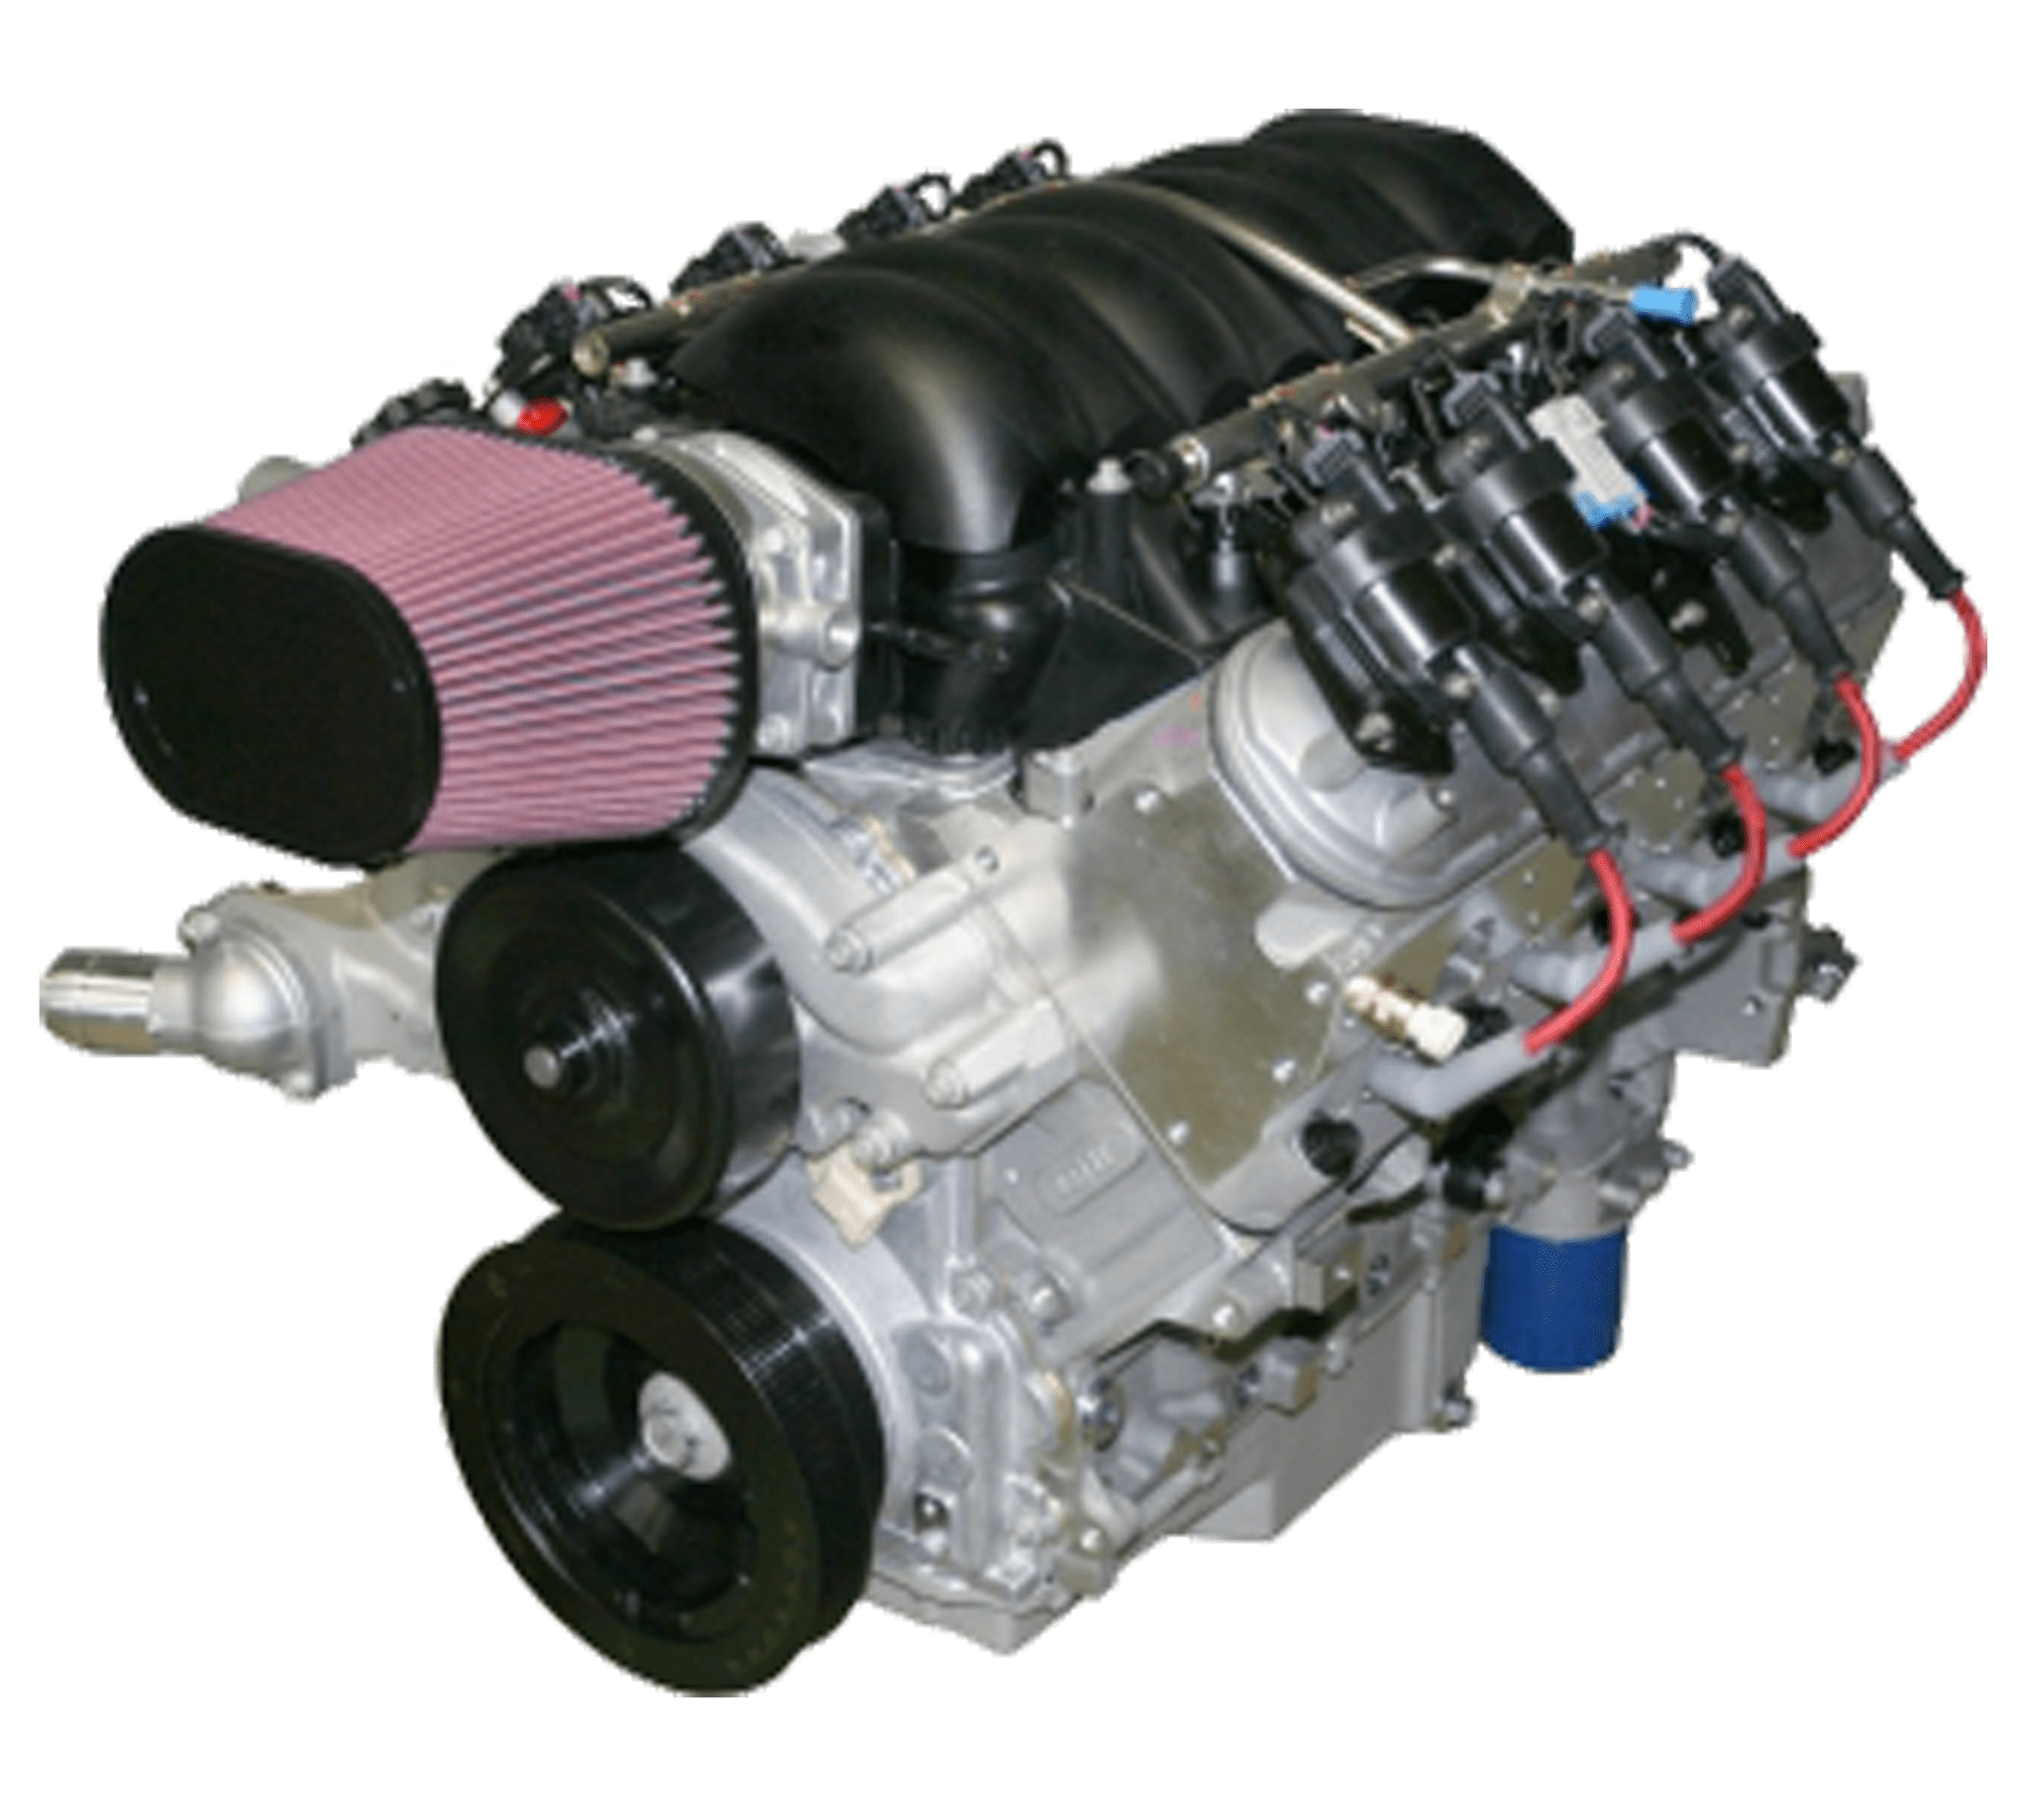 Купить мотор 3 лс. Мотор GM ls3. Мотор Шевроле ls3. V8 ls3 GM Perfomance. Chevrolet ls2 engine.